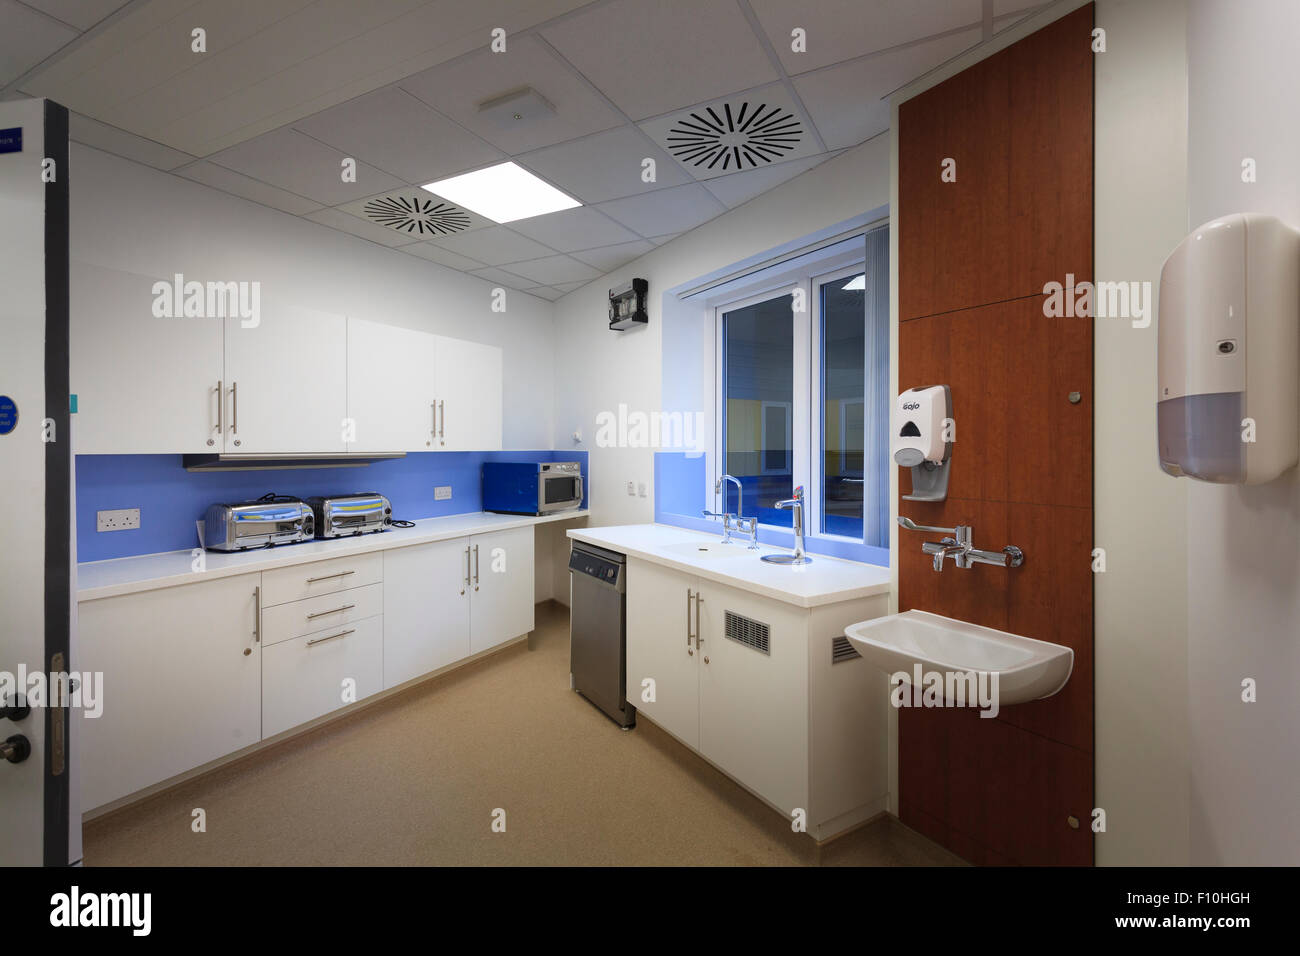 New hospital ward kitchen without people Stock Photo